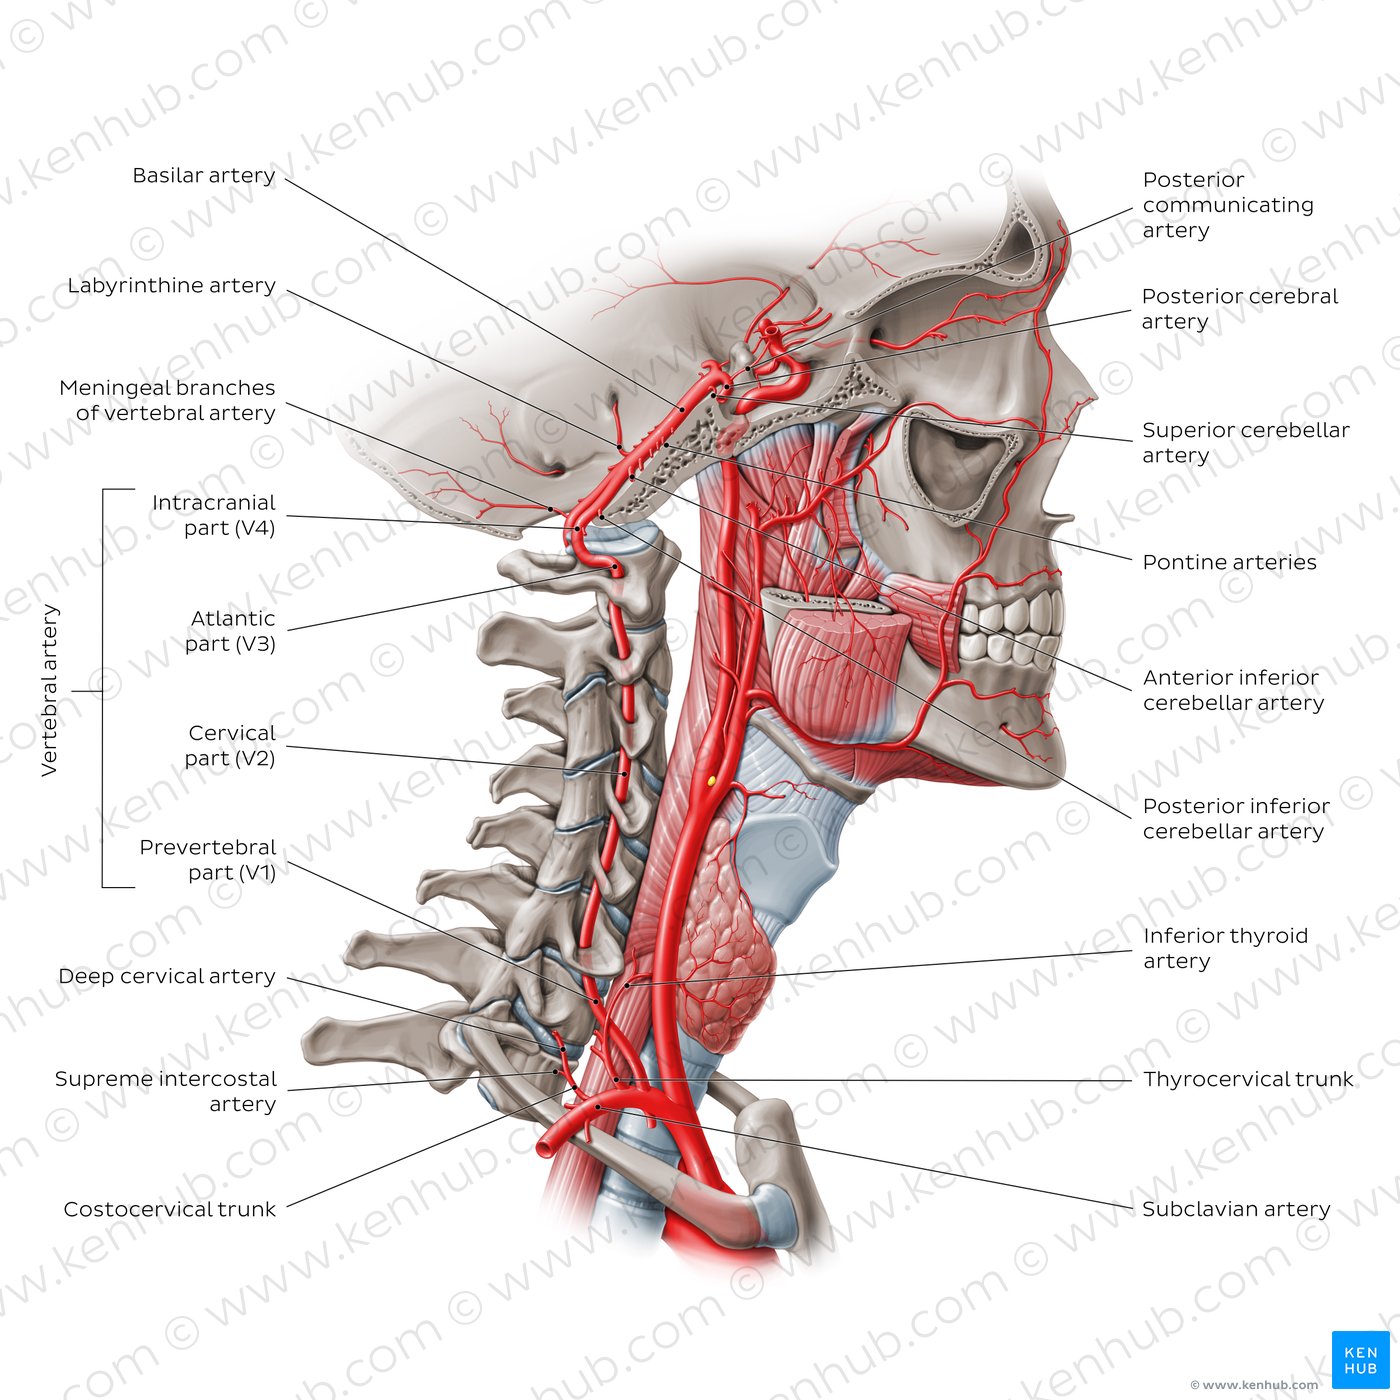 Arteries of the head and neck: Vertebral artery (diagram)